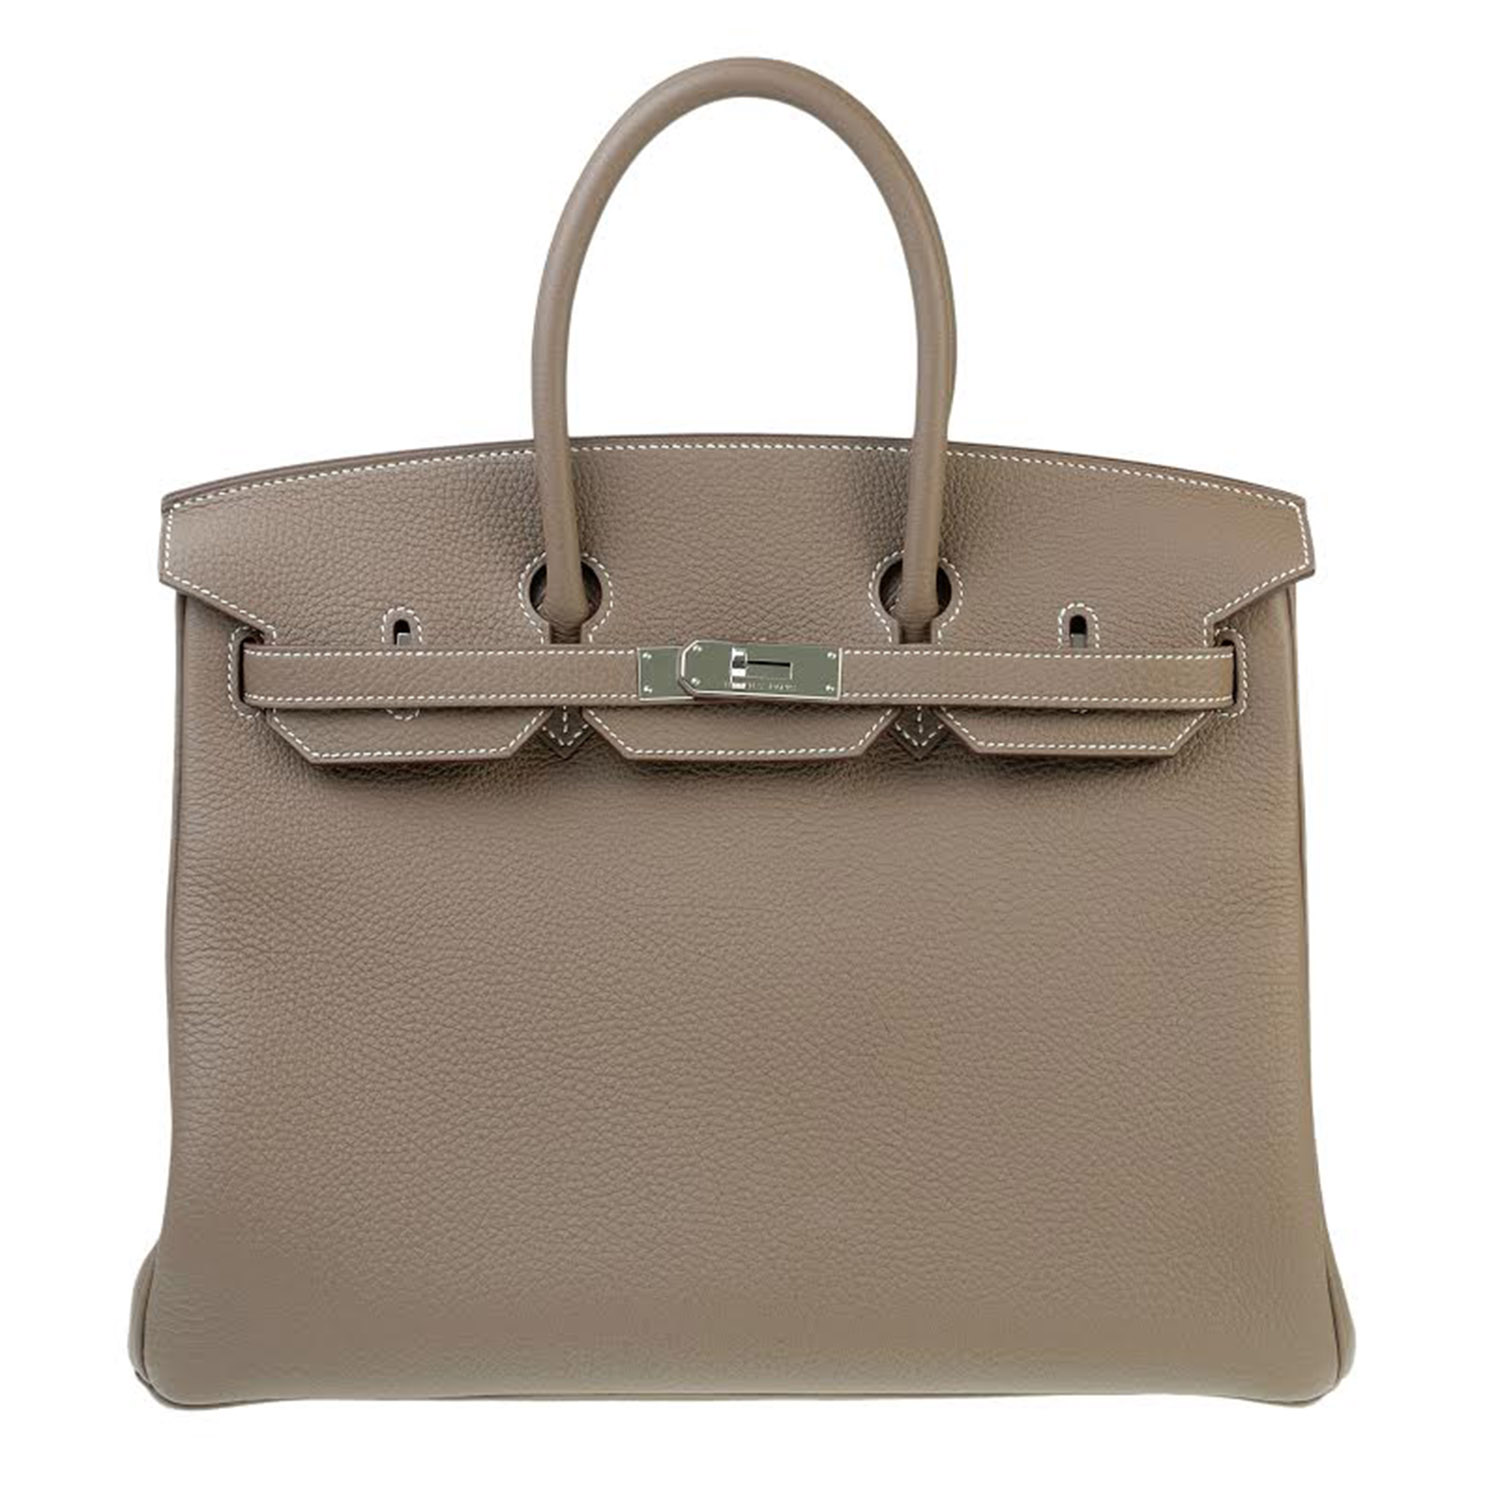 Hermes Picotin 22 - Luxe Bag Rental